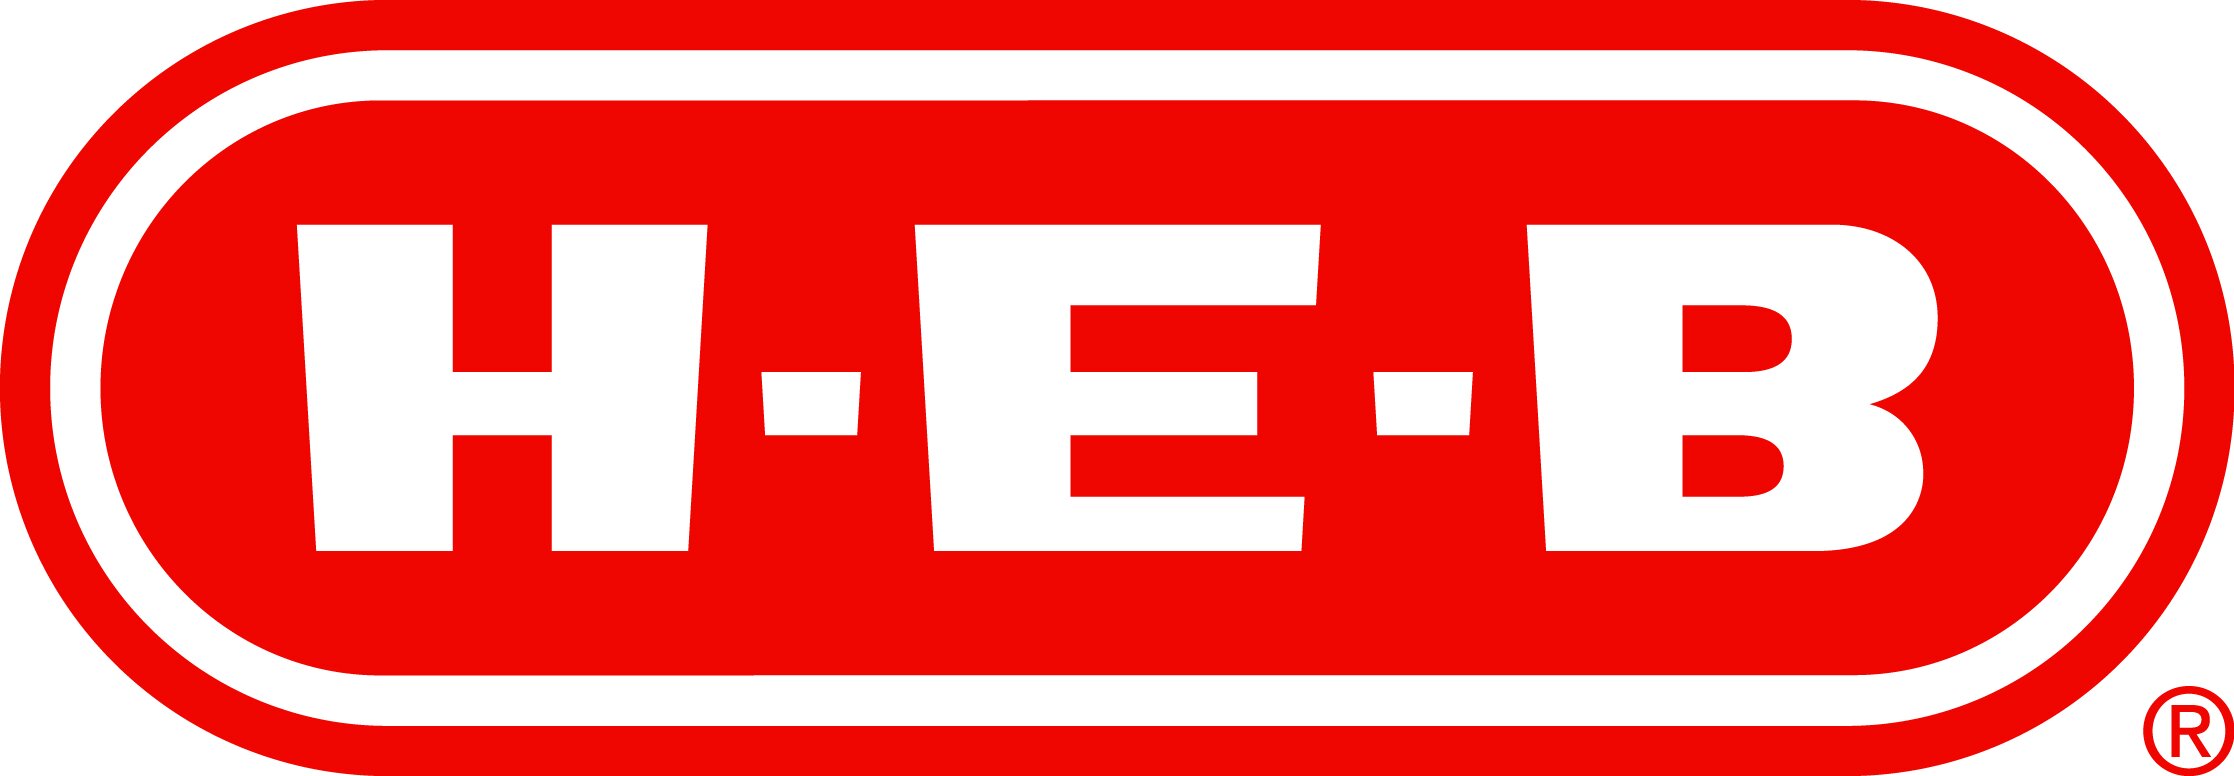 H-E-B_Main_Racetrack_Logo.png